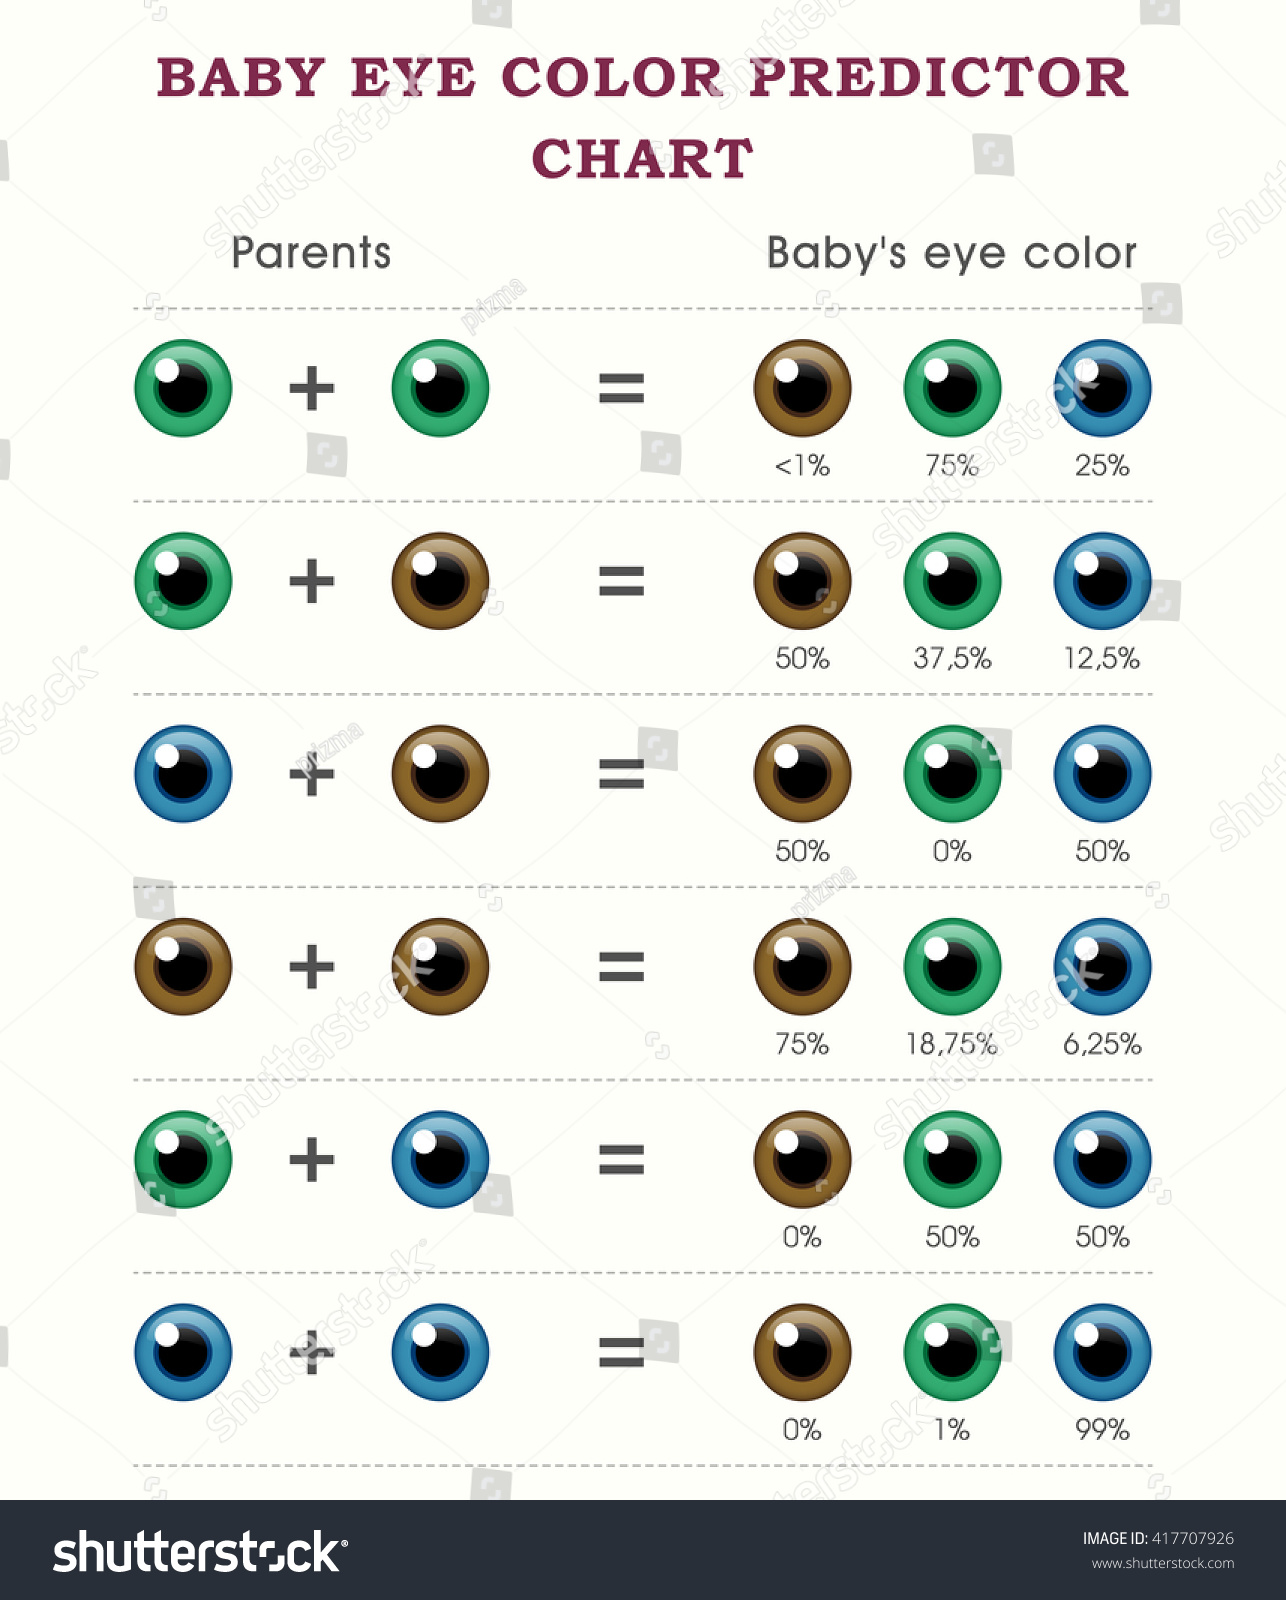 Baby Eye Color Predictor Chart Template Stock Vector 417707926 ...